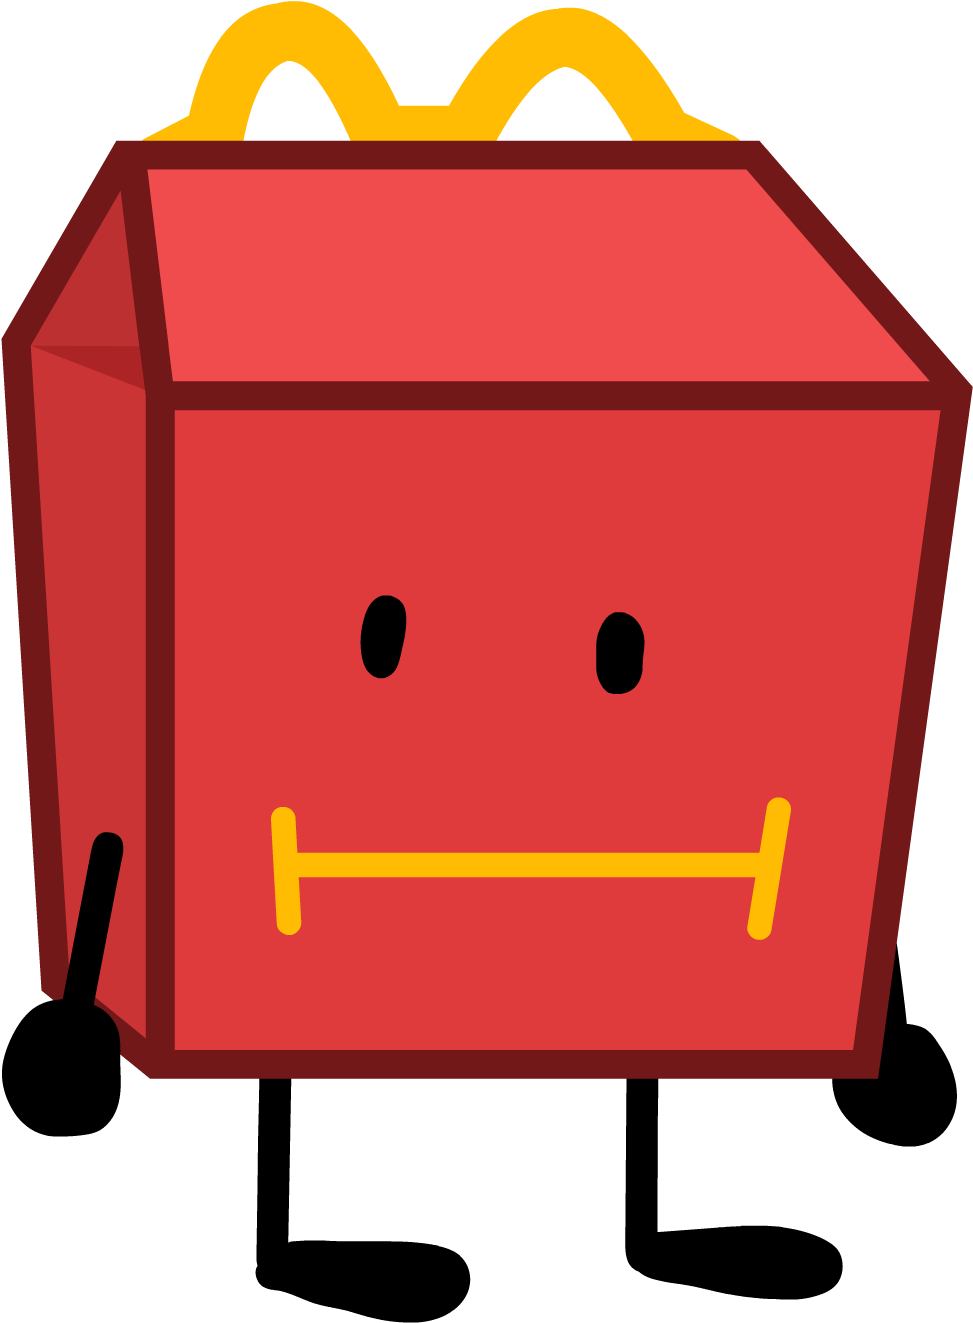 A Cartoon Of A Red Box